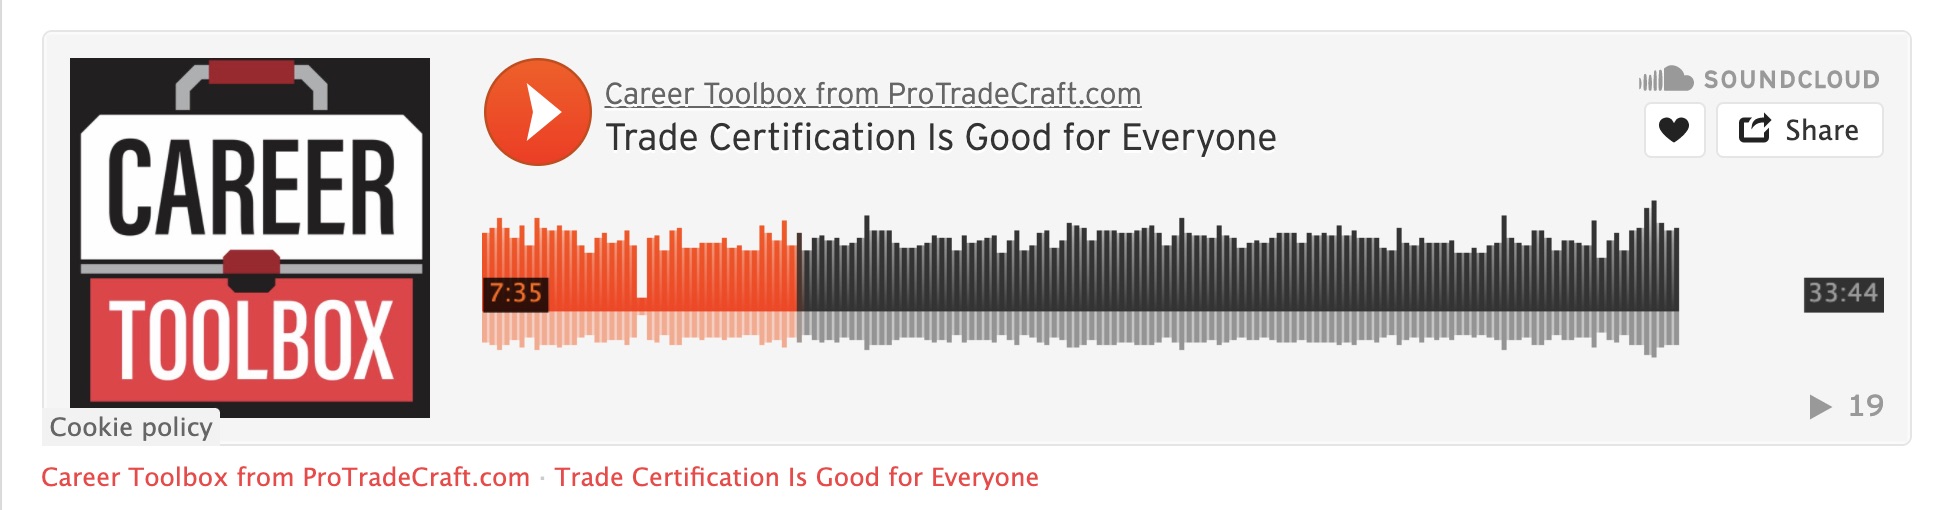 career-toolbox-podcast-trade-certification.jpg